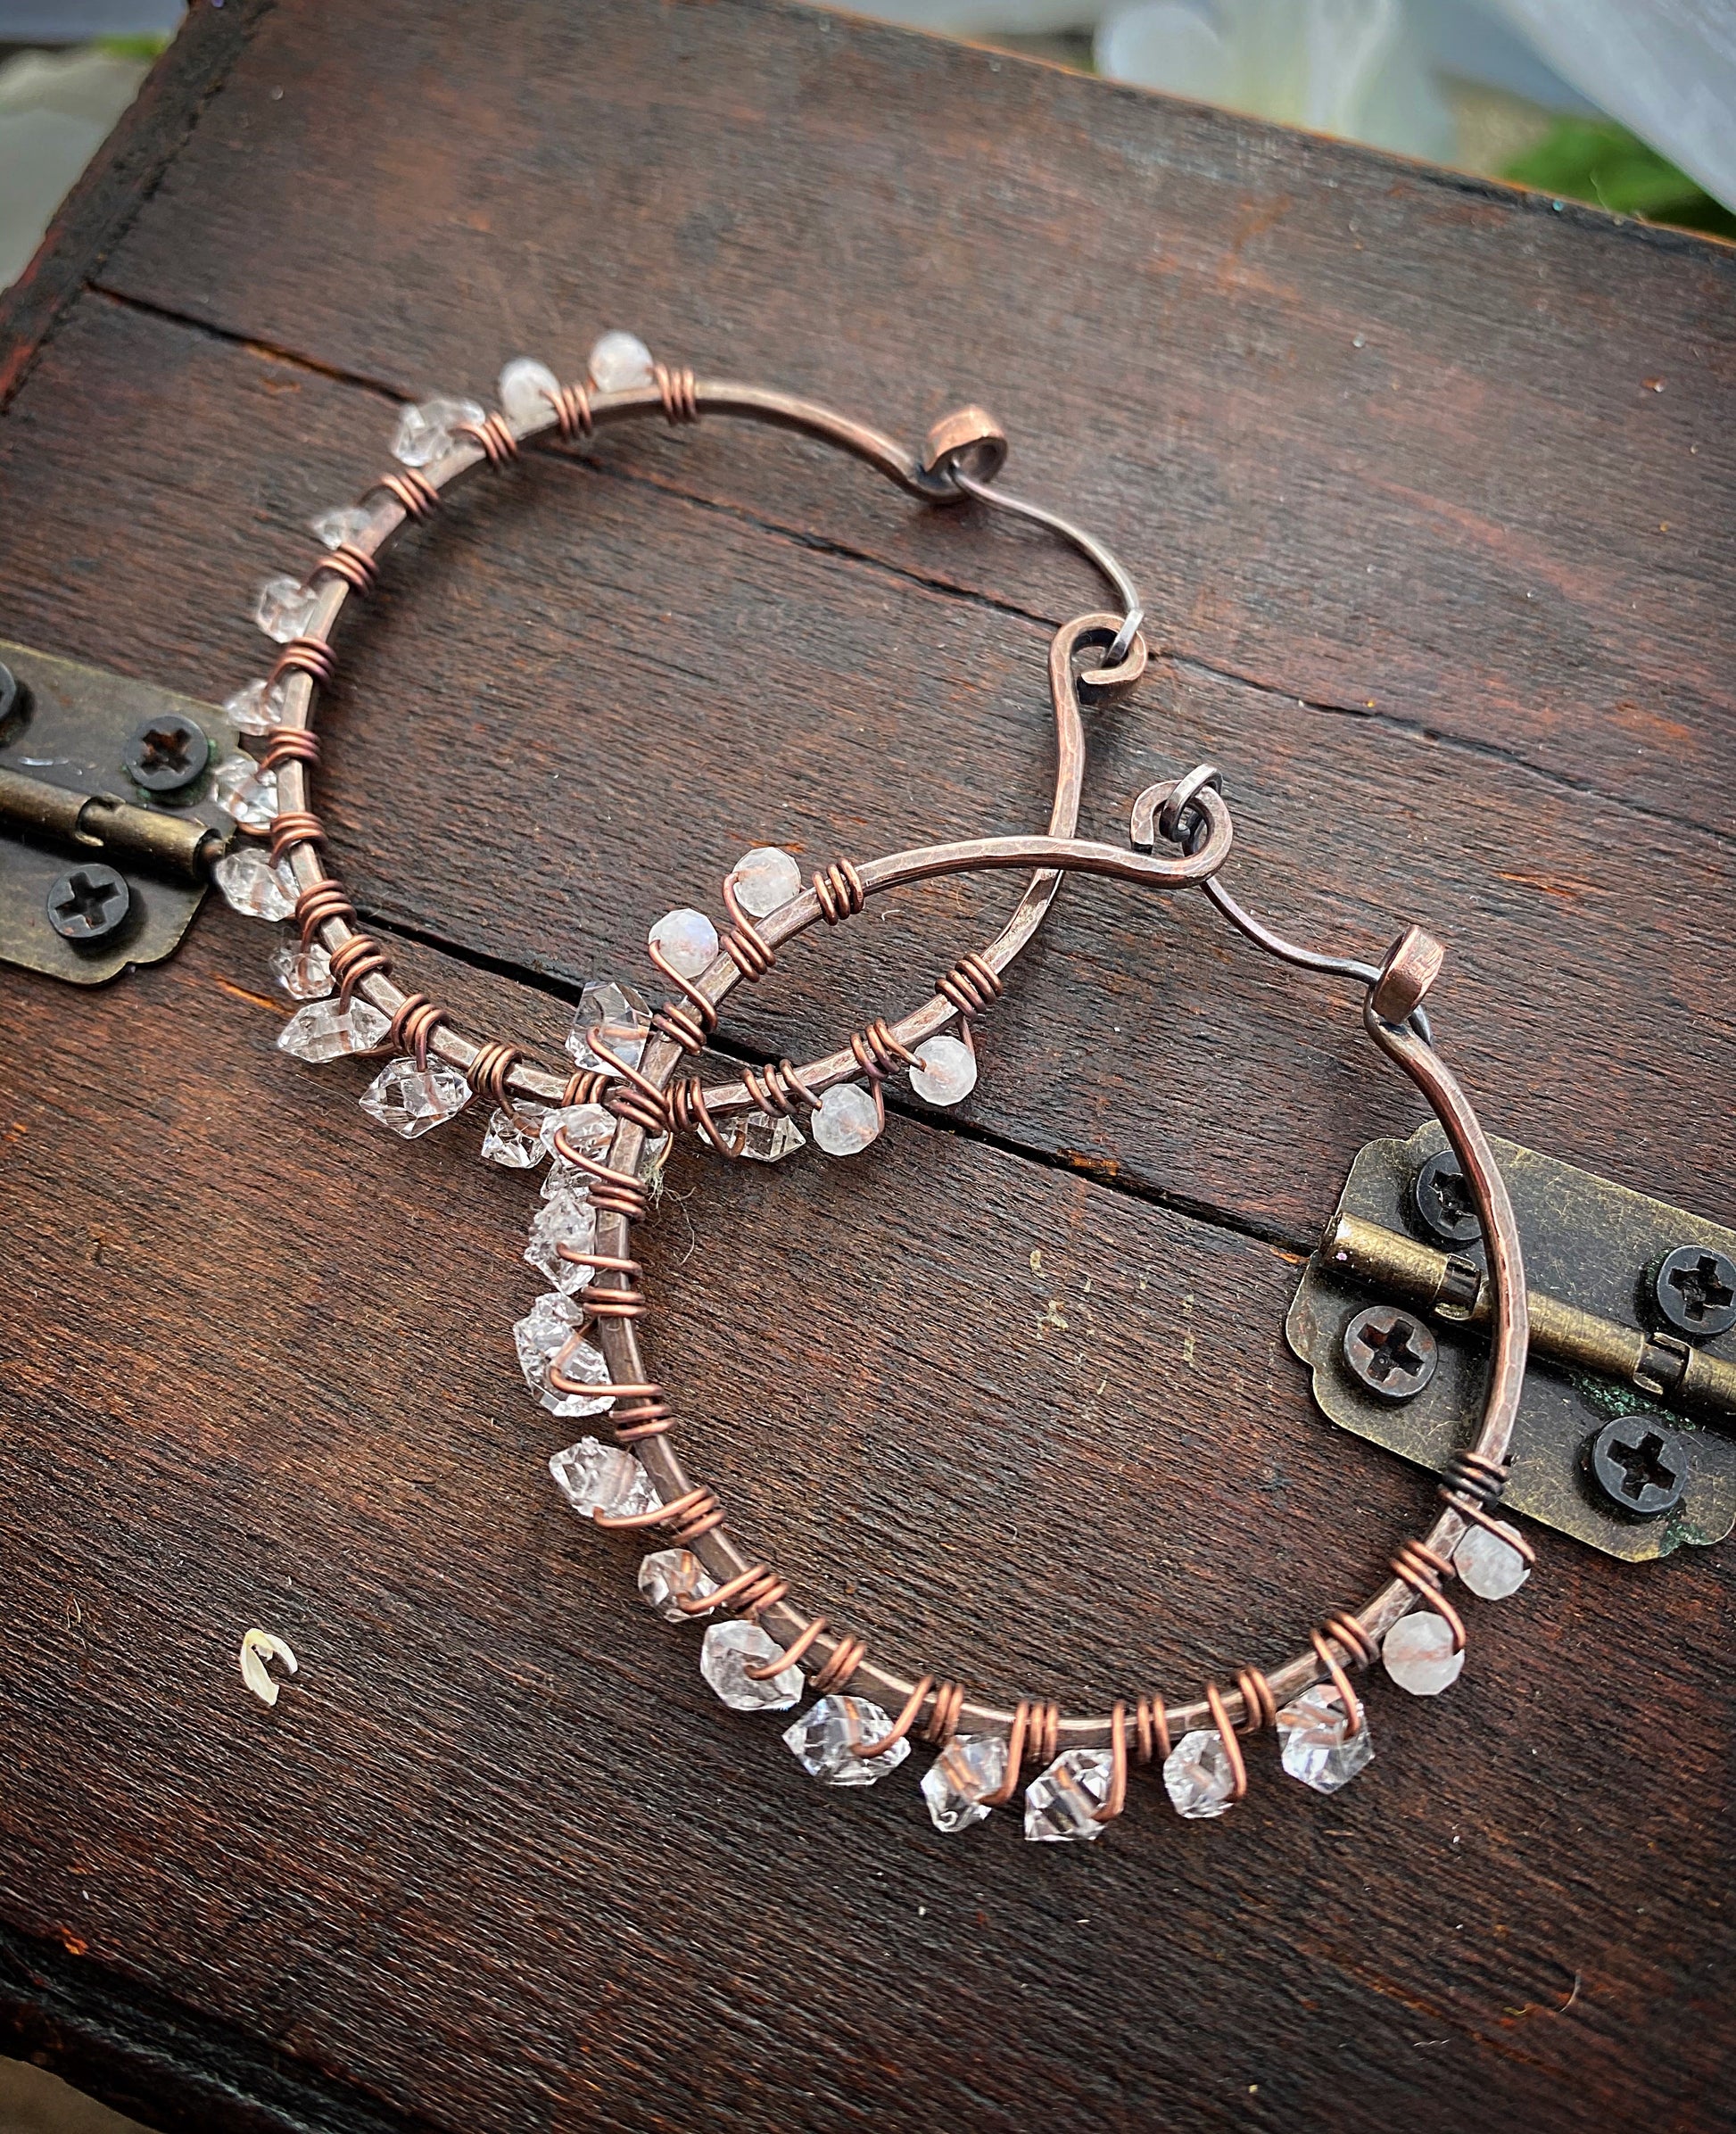 Herkimer diamonds, moonstone, copper metal hoops, wire wrapped, earrings - Andria Bieber Designs 